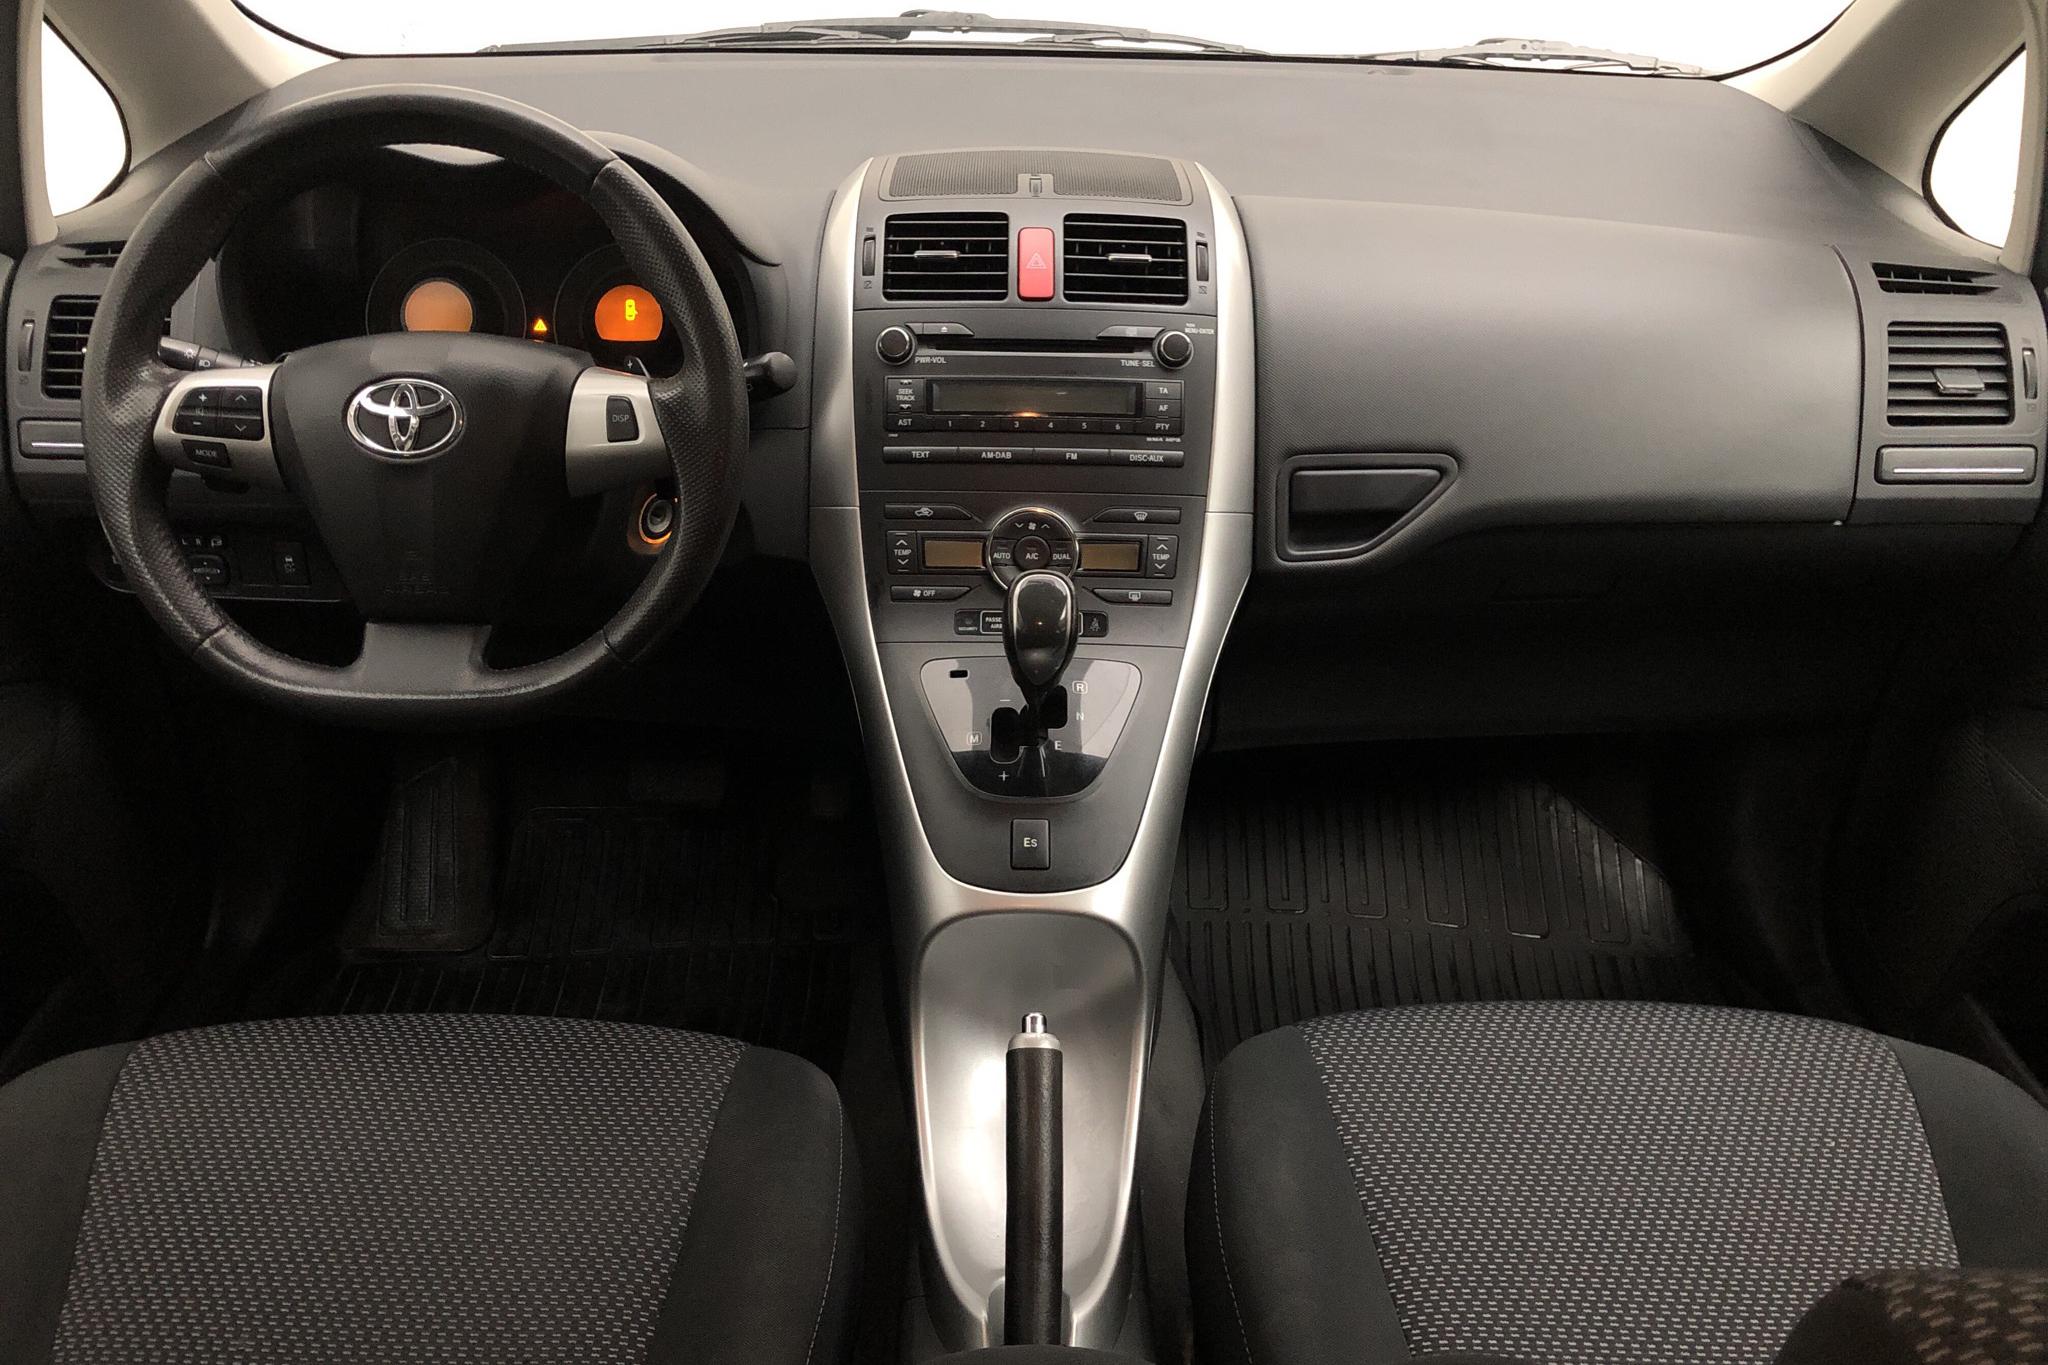 Toyota Auris 1.6 VVT-i 5dr (132hk) - 89 190 km - Automatic - silver - 2010